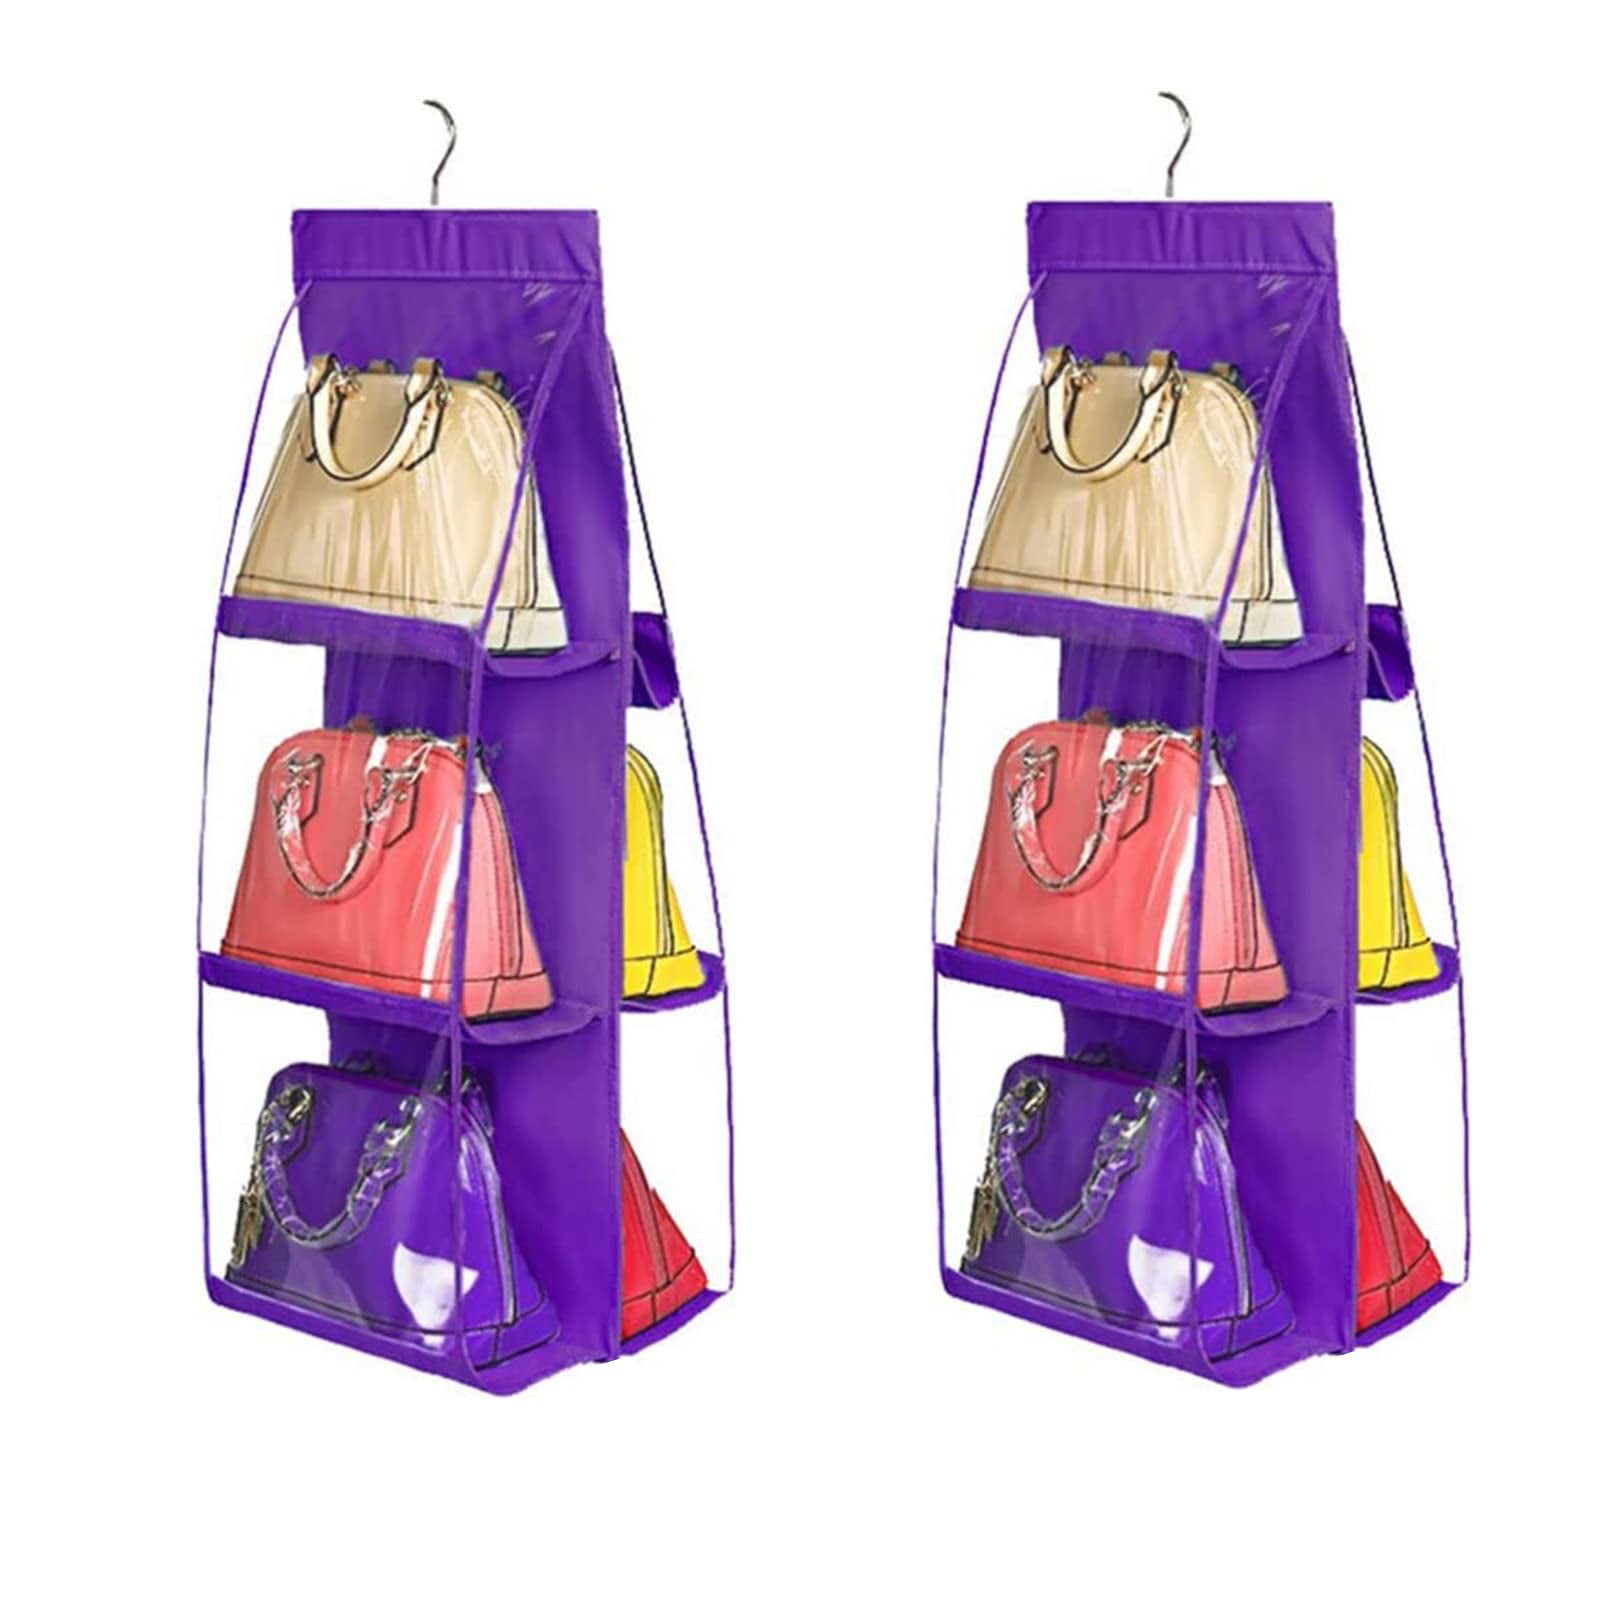 Clear Closet Hanging Handbag Organizer with Zippers, KMOTASUO Easy Access  Wardrobe Tote Bag Purse St…See more Clear Closet Hanging Handbag Organizer